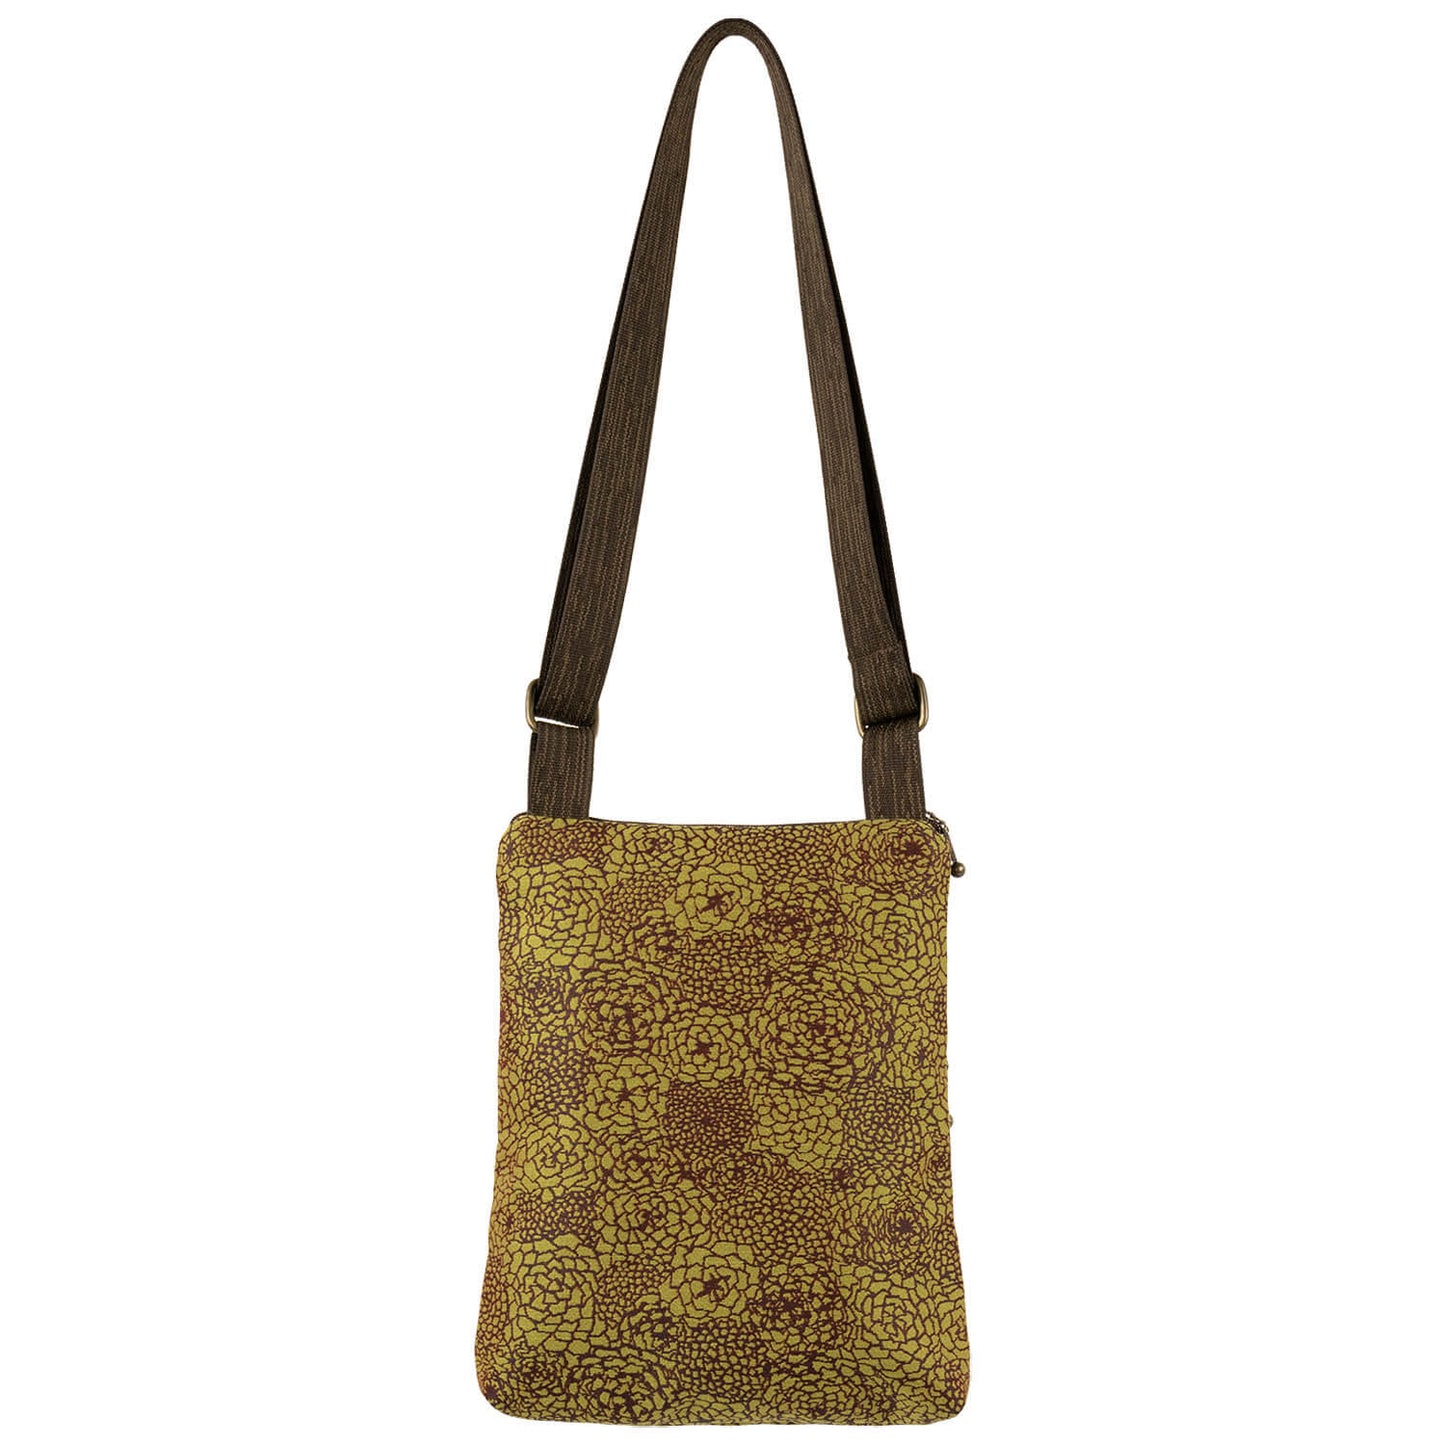 Pocket Bag in Stellar Olive by Maruca Designs